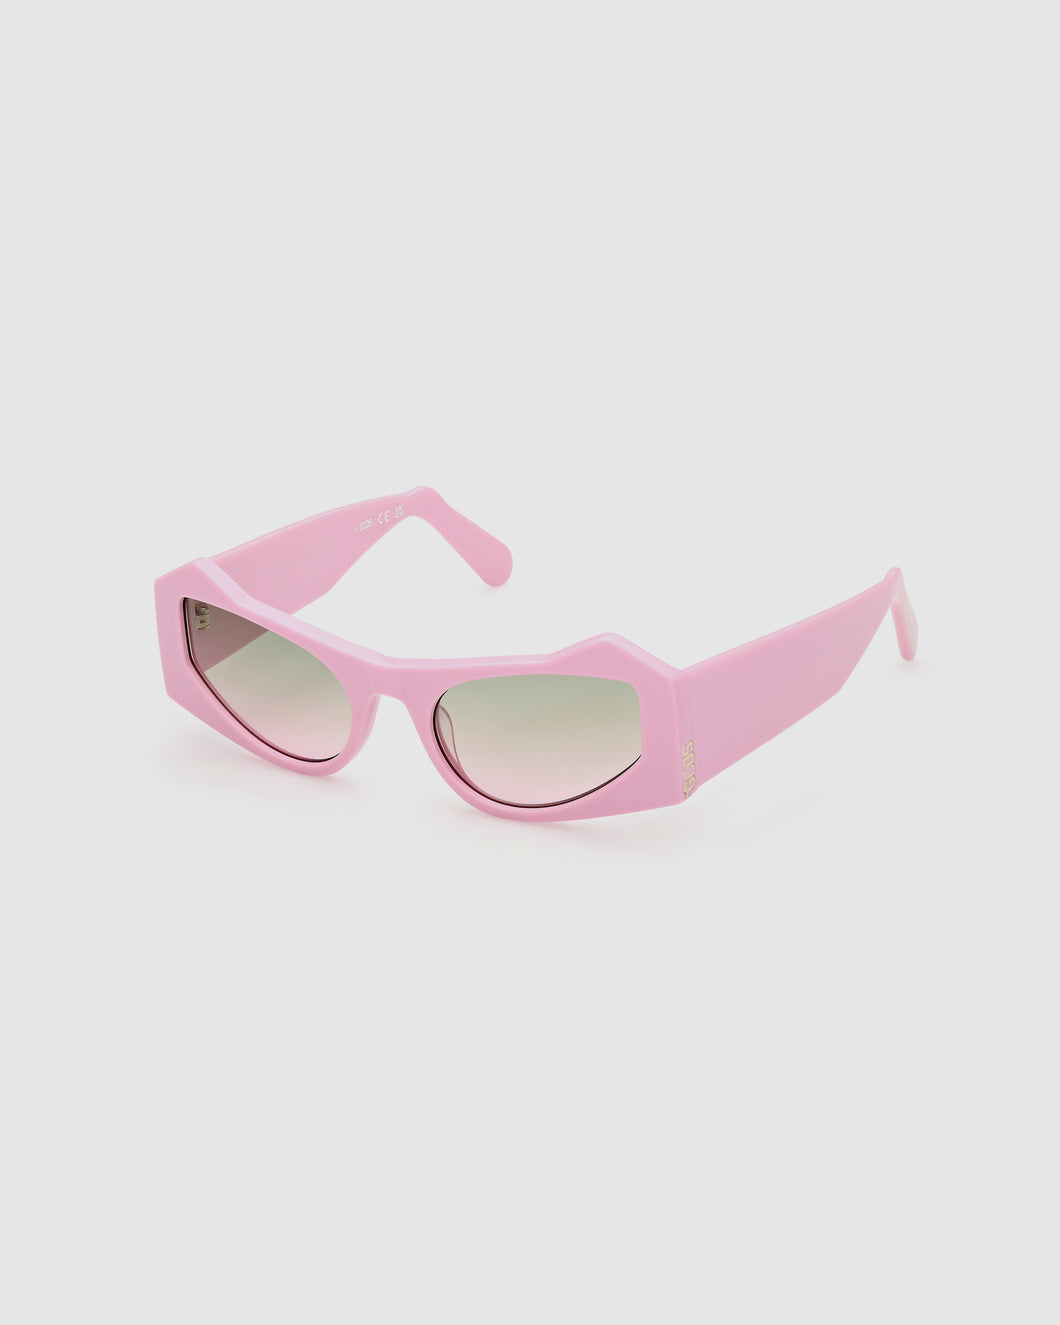 GD0022 Cat-eye sunglasses : Unisex Sunglasses Pink  | GCDS